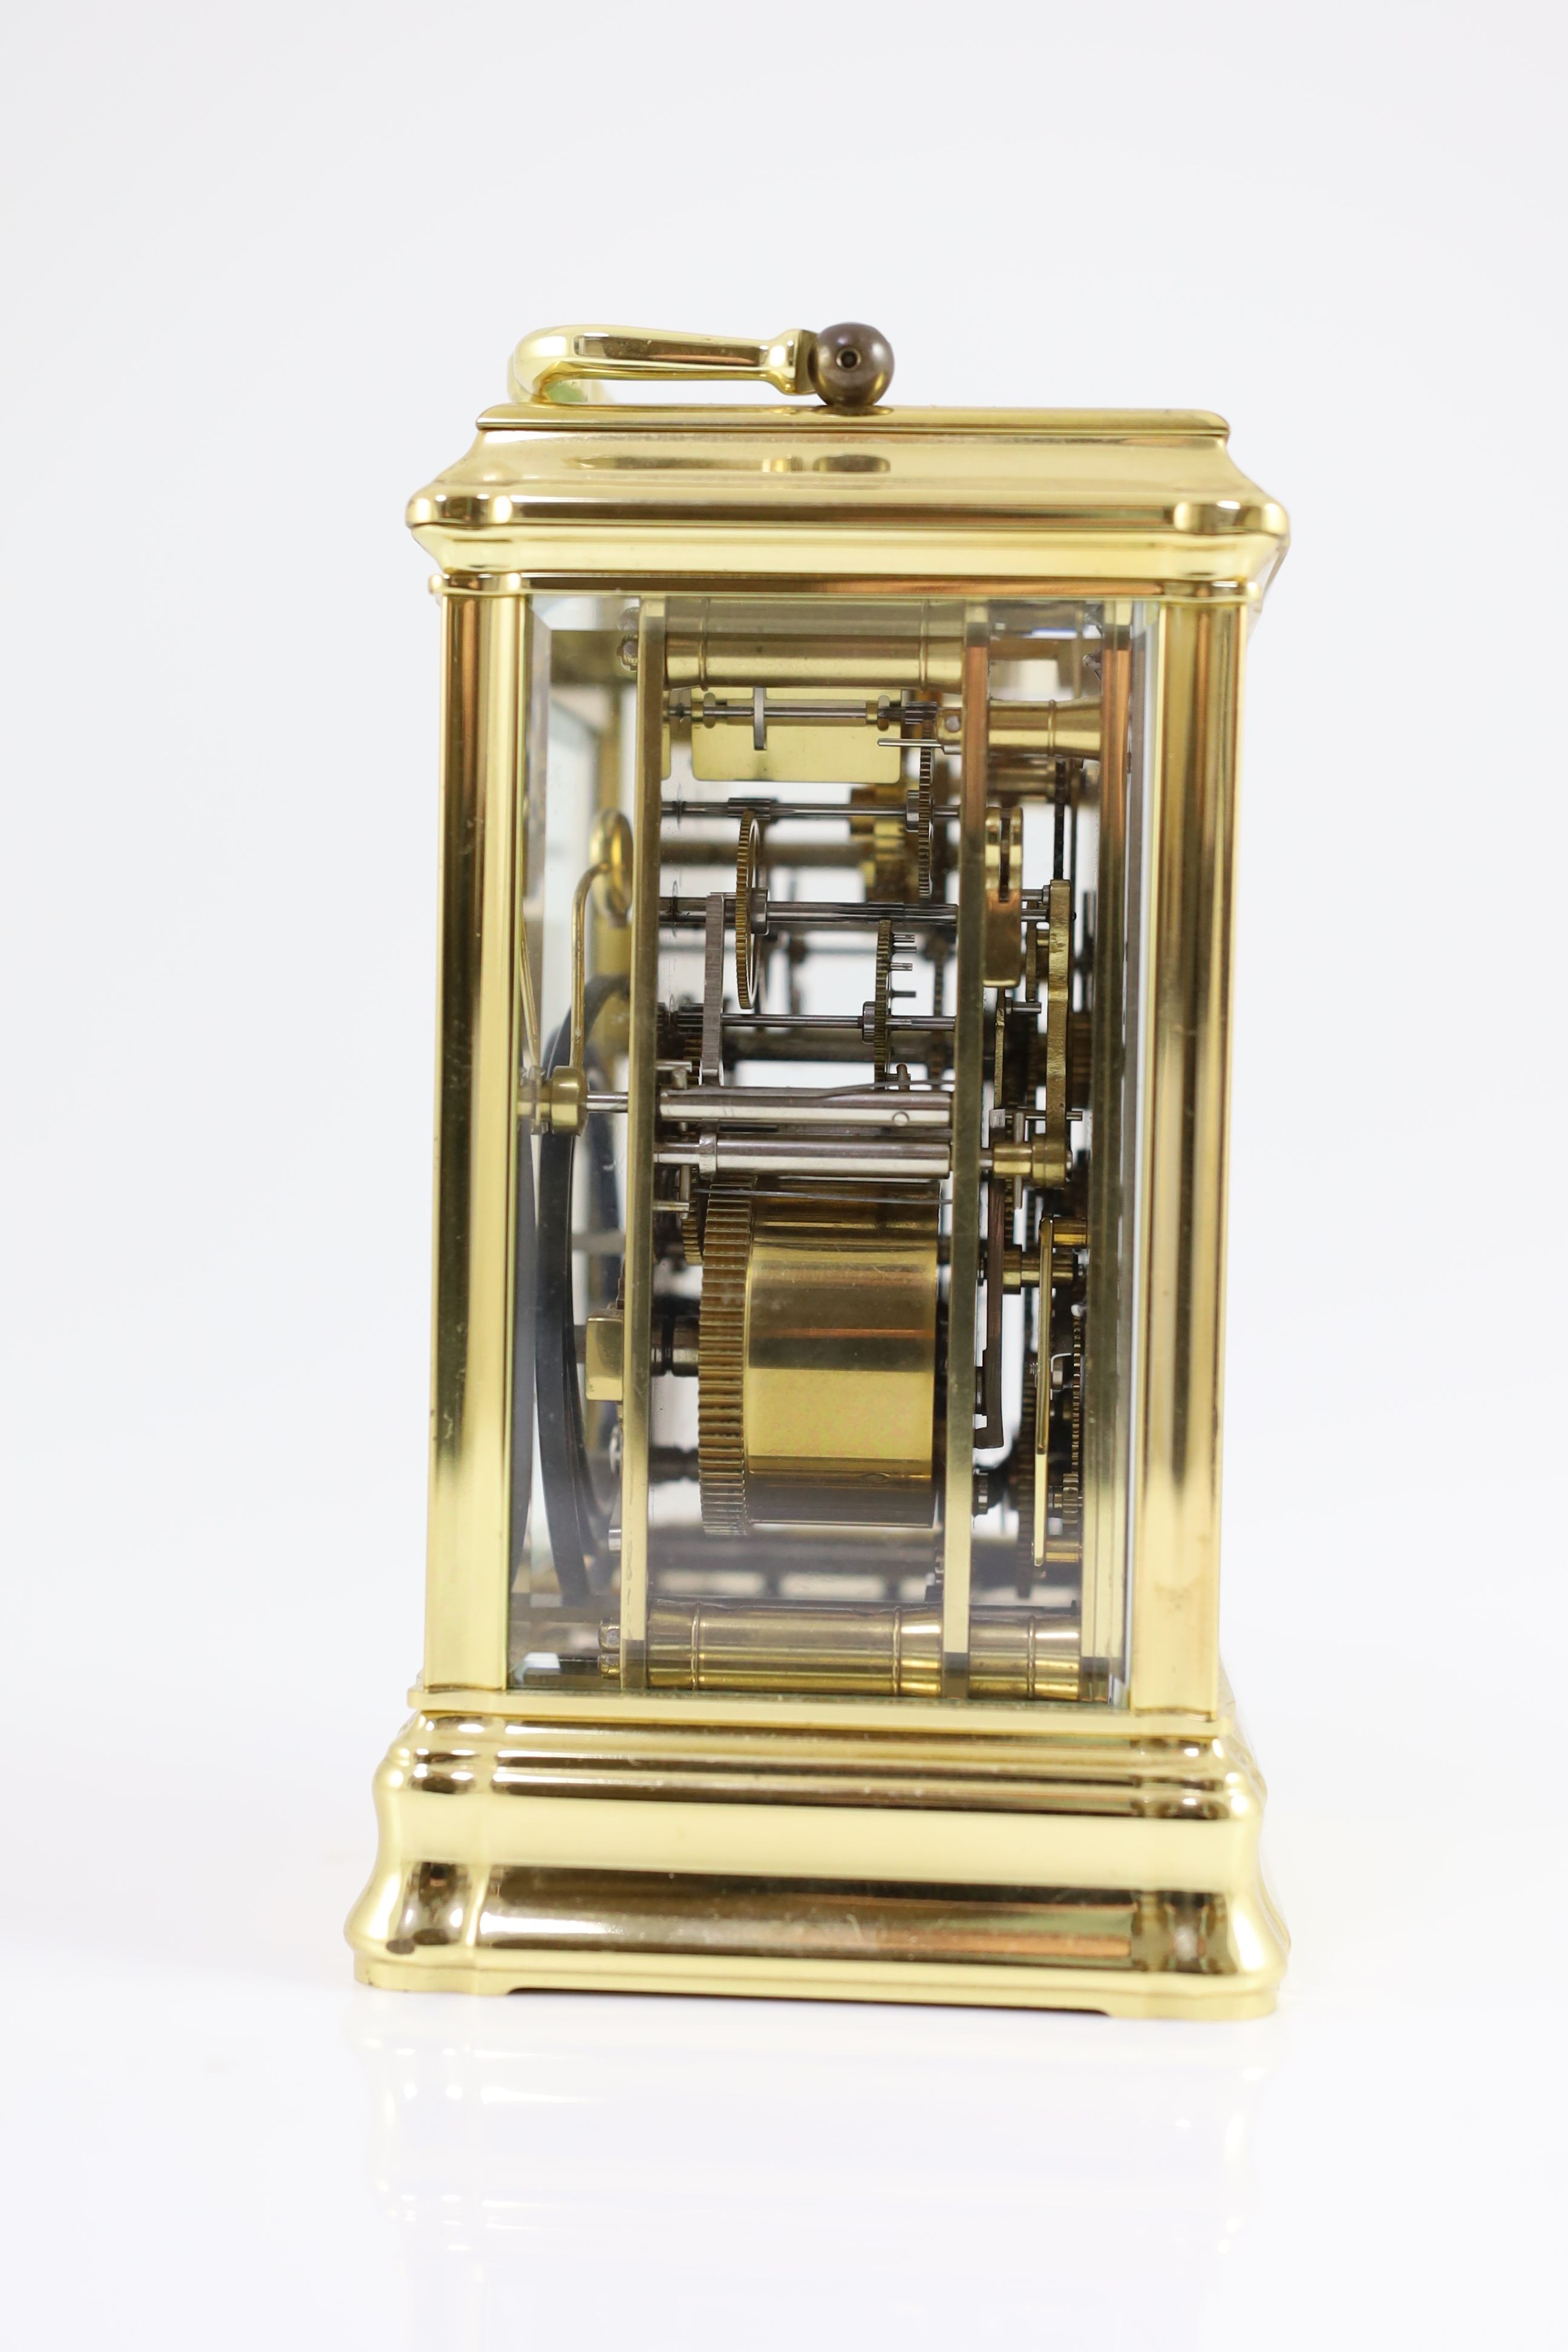 A L'Epée hour repeating brass carriage clock, width 9.5cm depth 8.5cm height 15.5cm